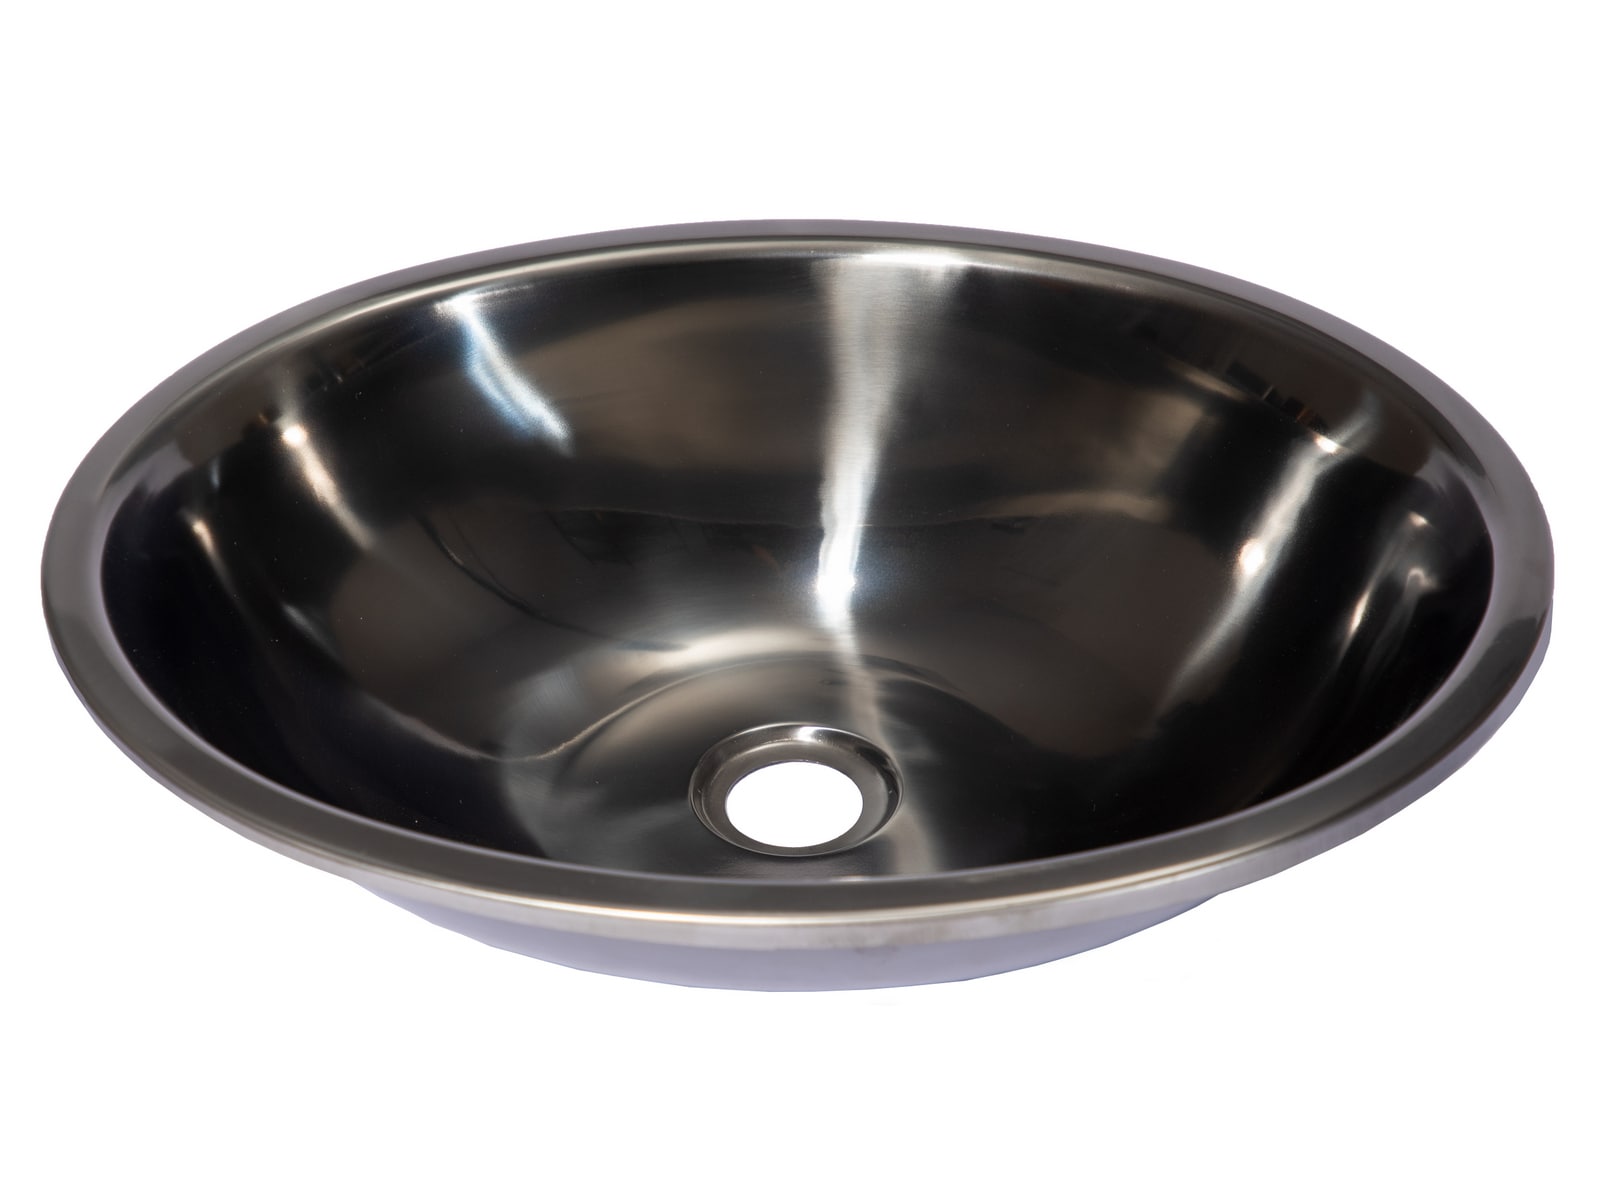 eden bath black stainless steel drop-in oval modern bathroom sink